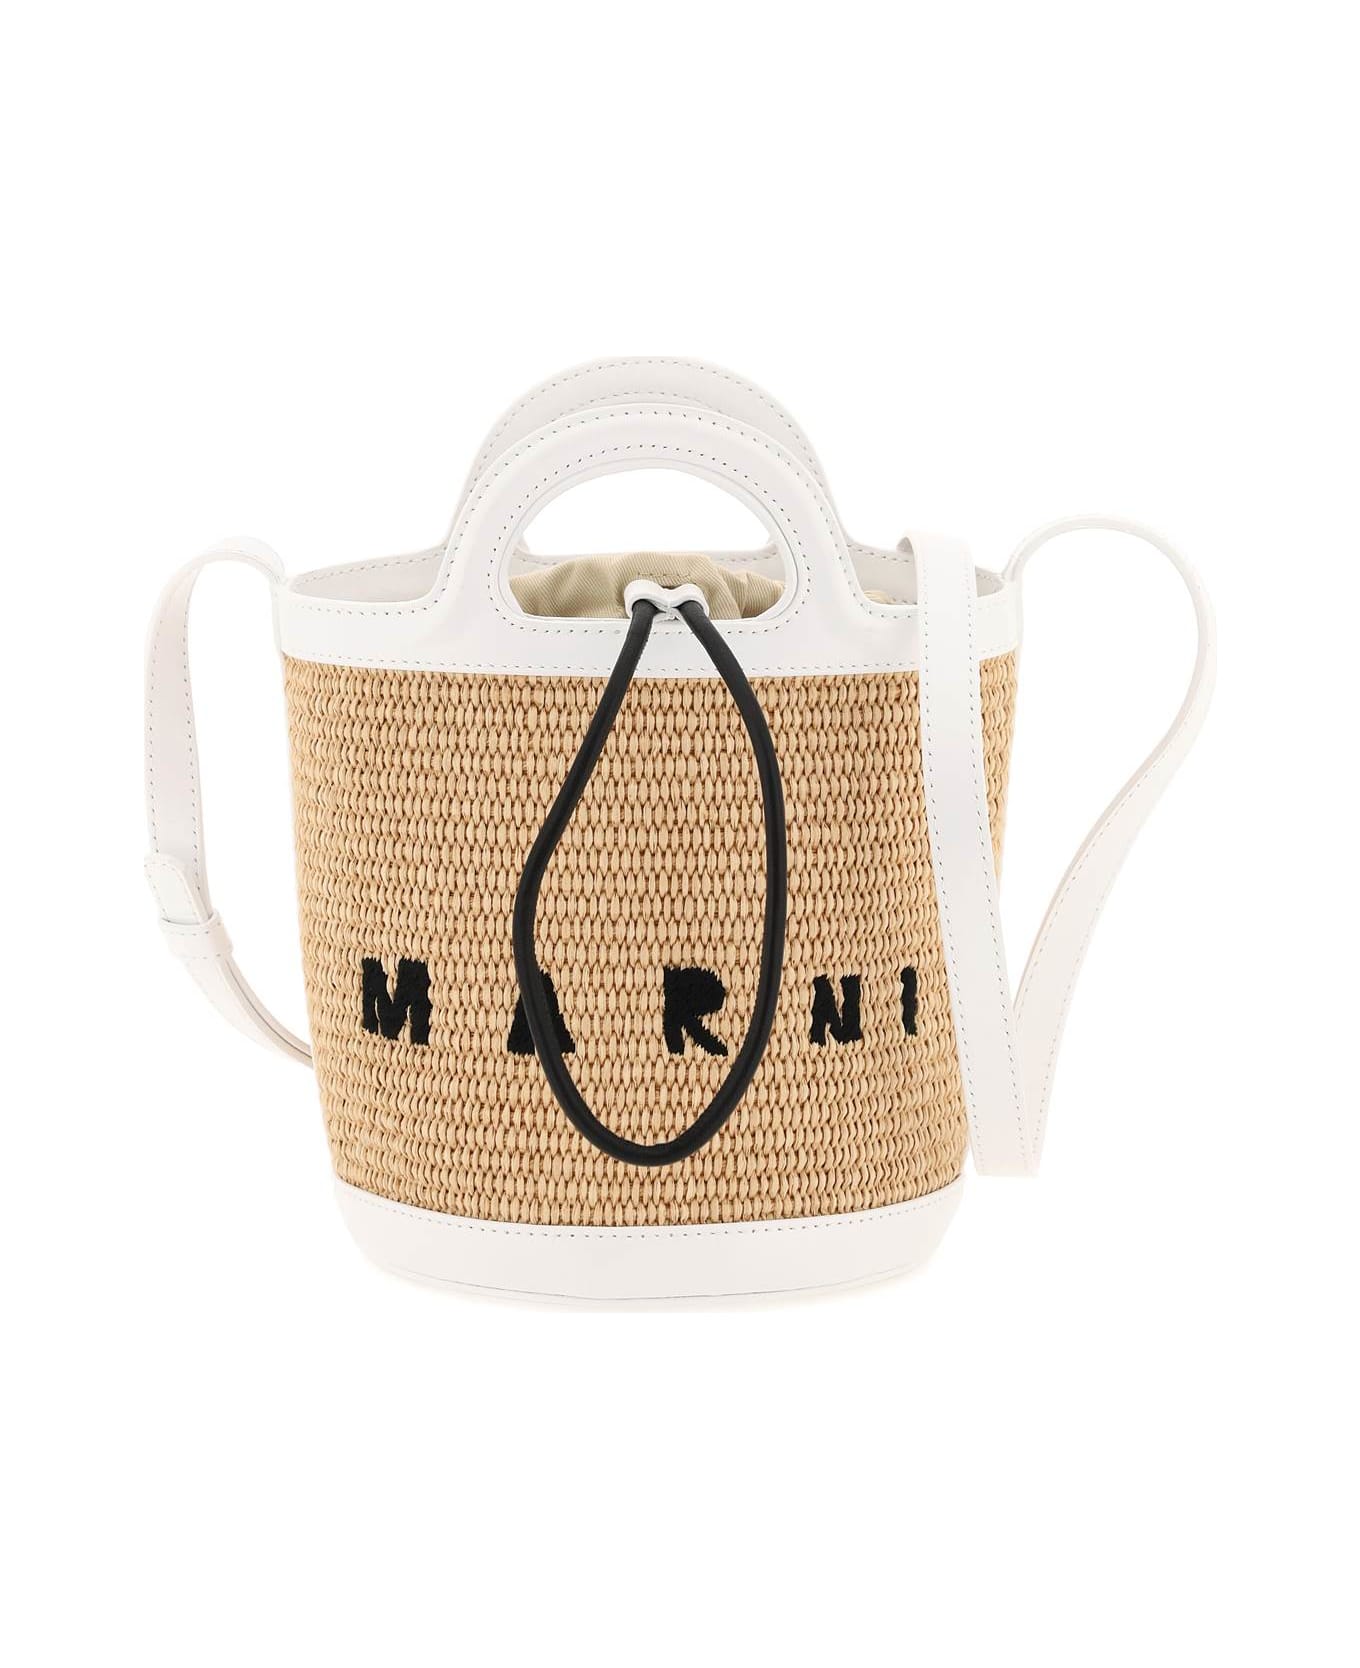 Marni Tropicalia Mini Bag In White Leather And Natural Raffia - White/natural ショルダーバッグ